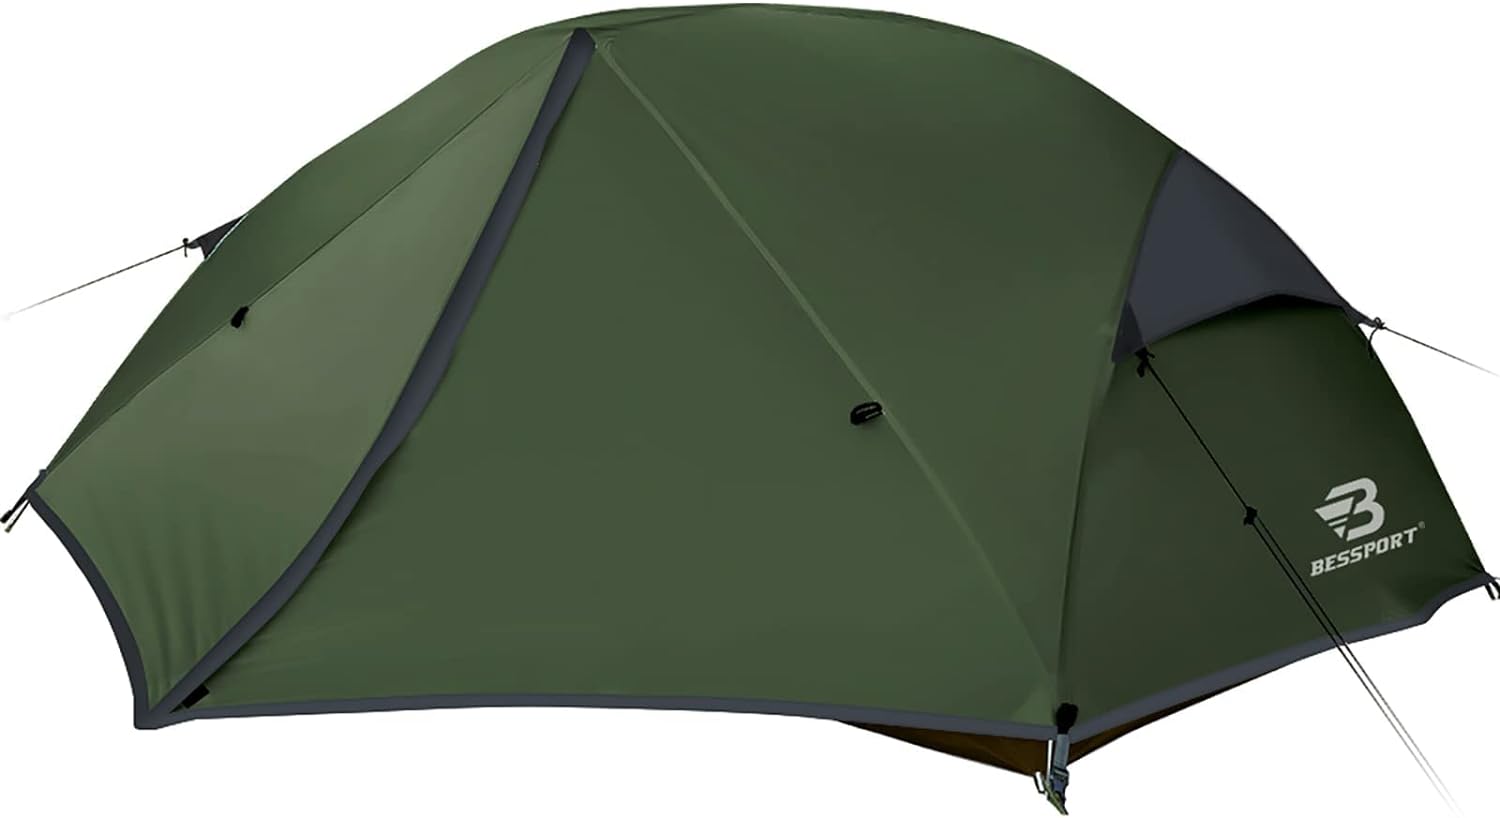 Bessport Lightweight Camping Tent for 2-3 People - Waterproof, Windproof, Two Doors, Easy Setup, Double Layer Outdoor Tent for 3-4 Seasons